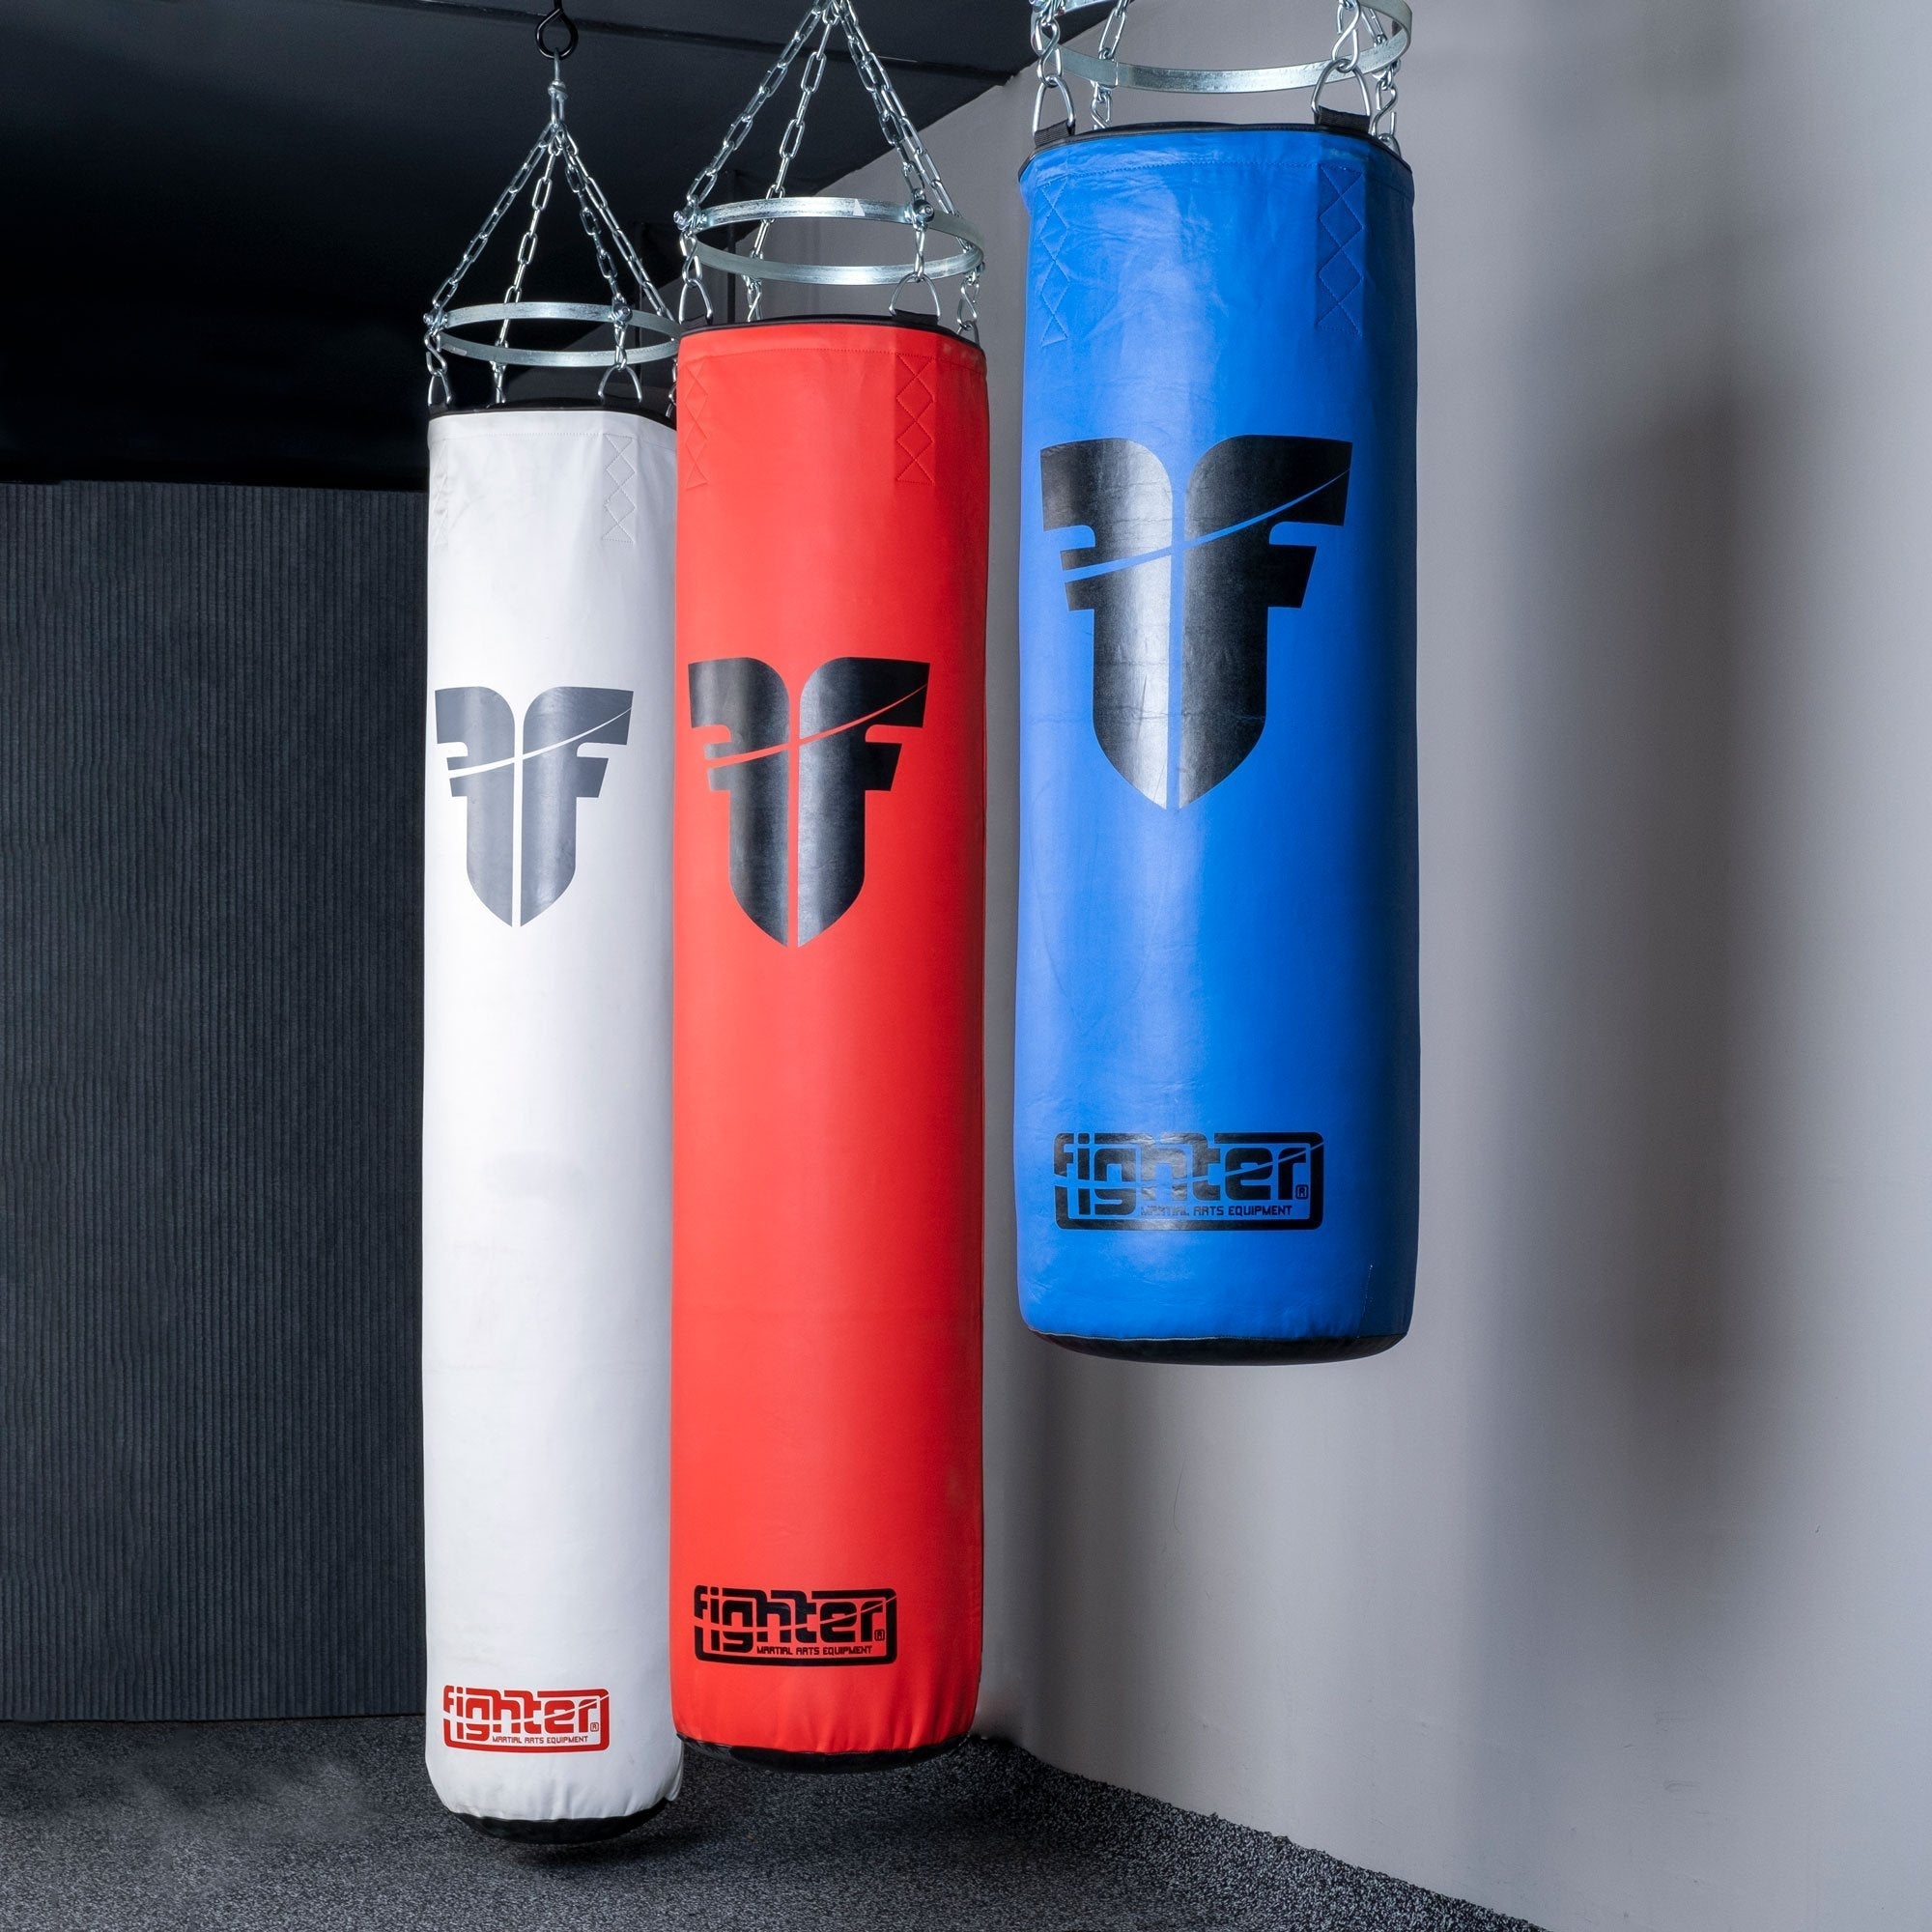 Fitness Boxing bag Fighter 150cm - black